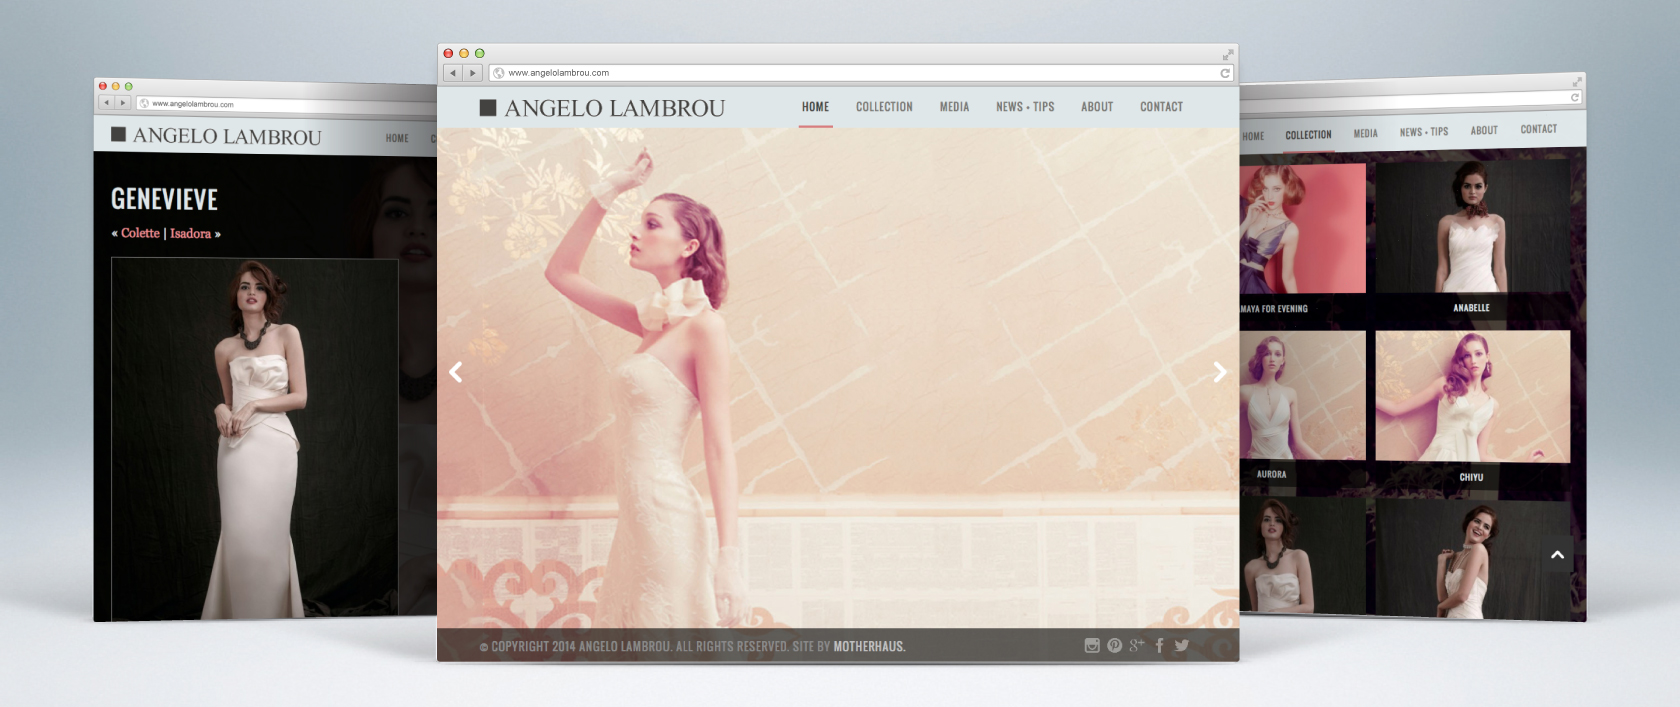 Angelo Lambrou Website Uta